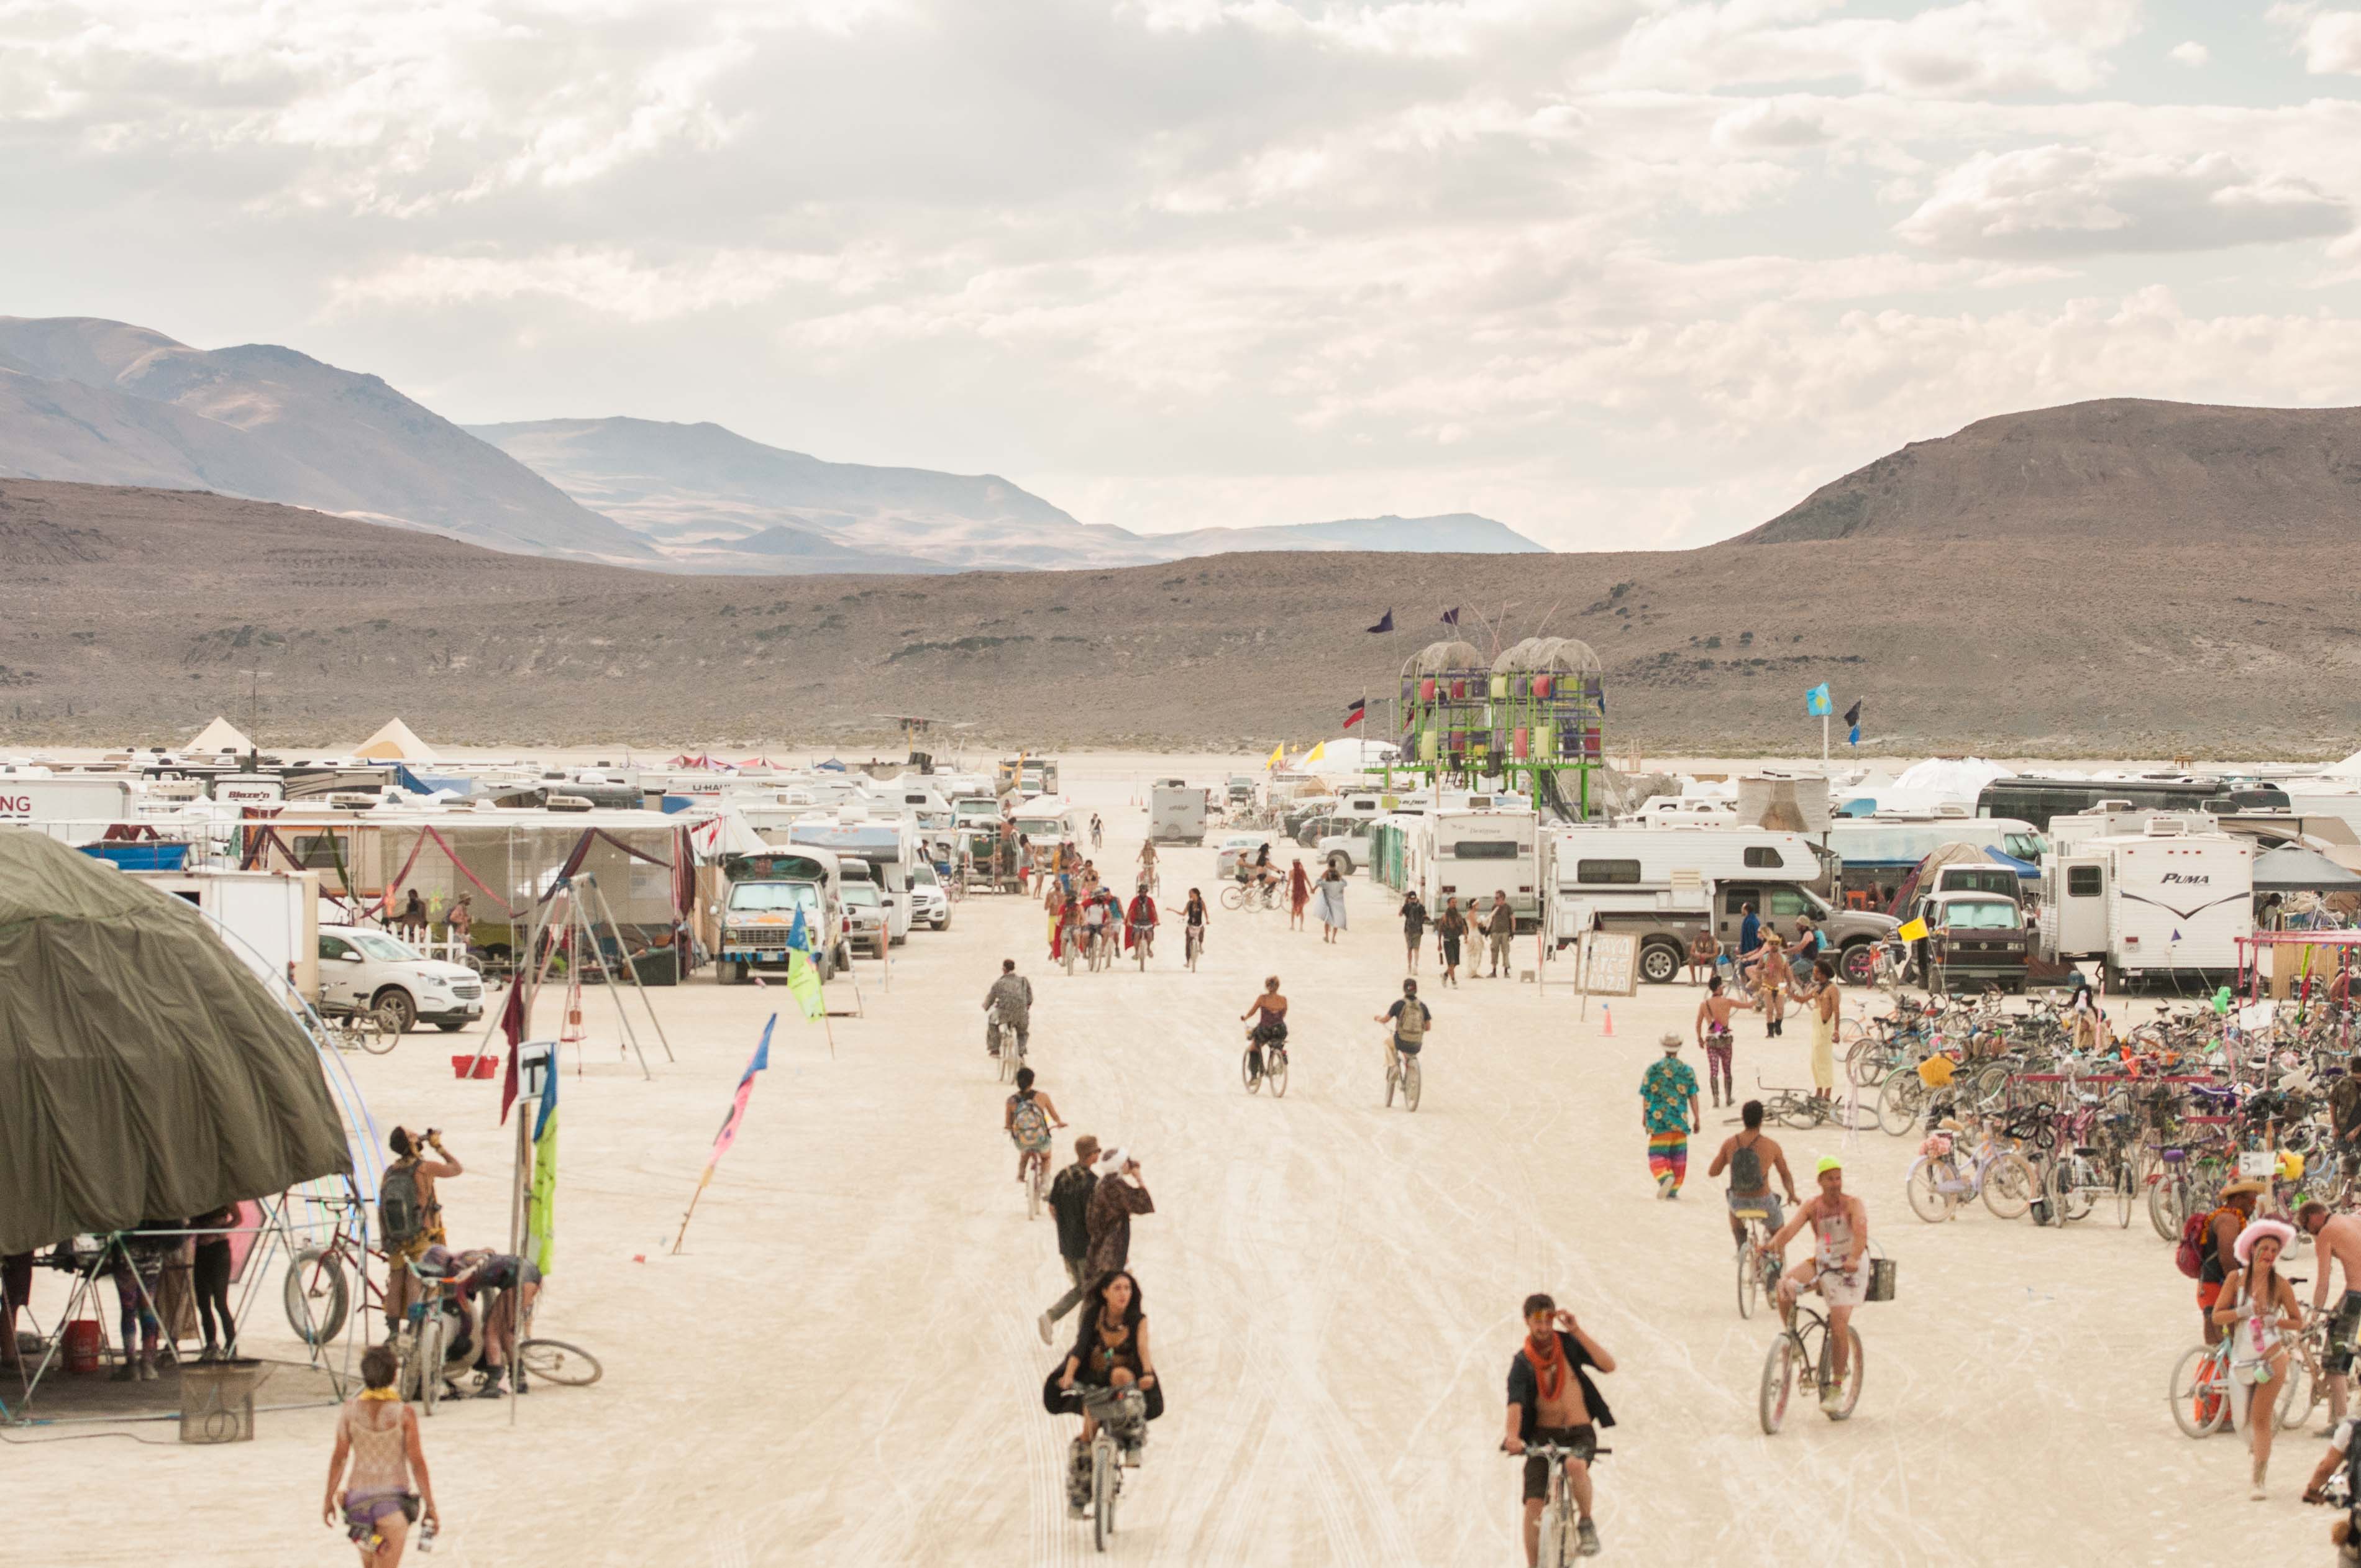 These photos capture the desert utopia of Burning Man